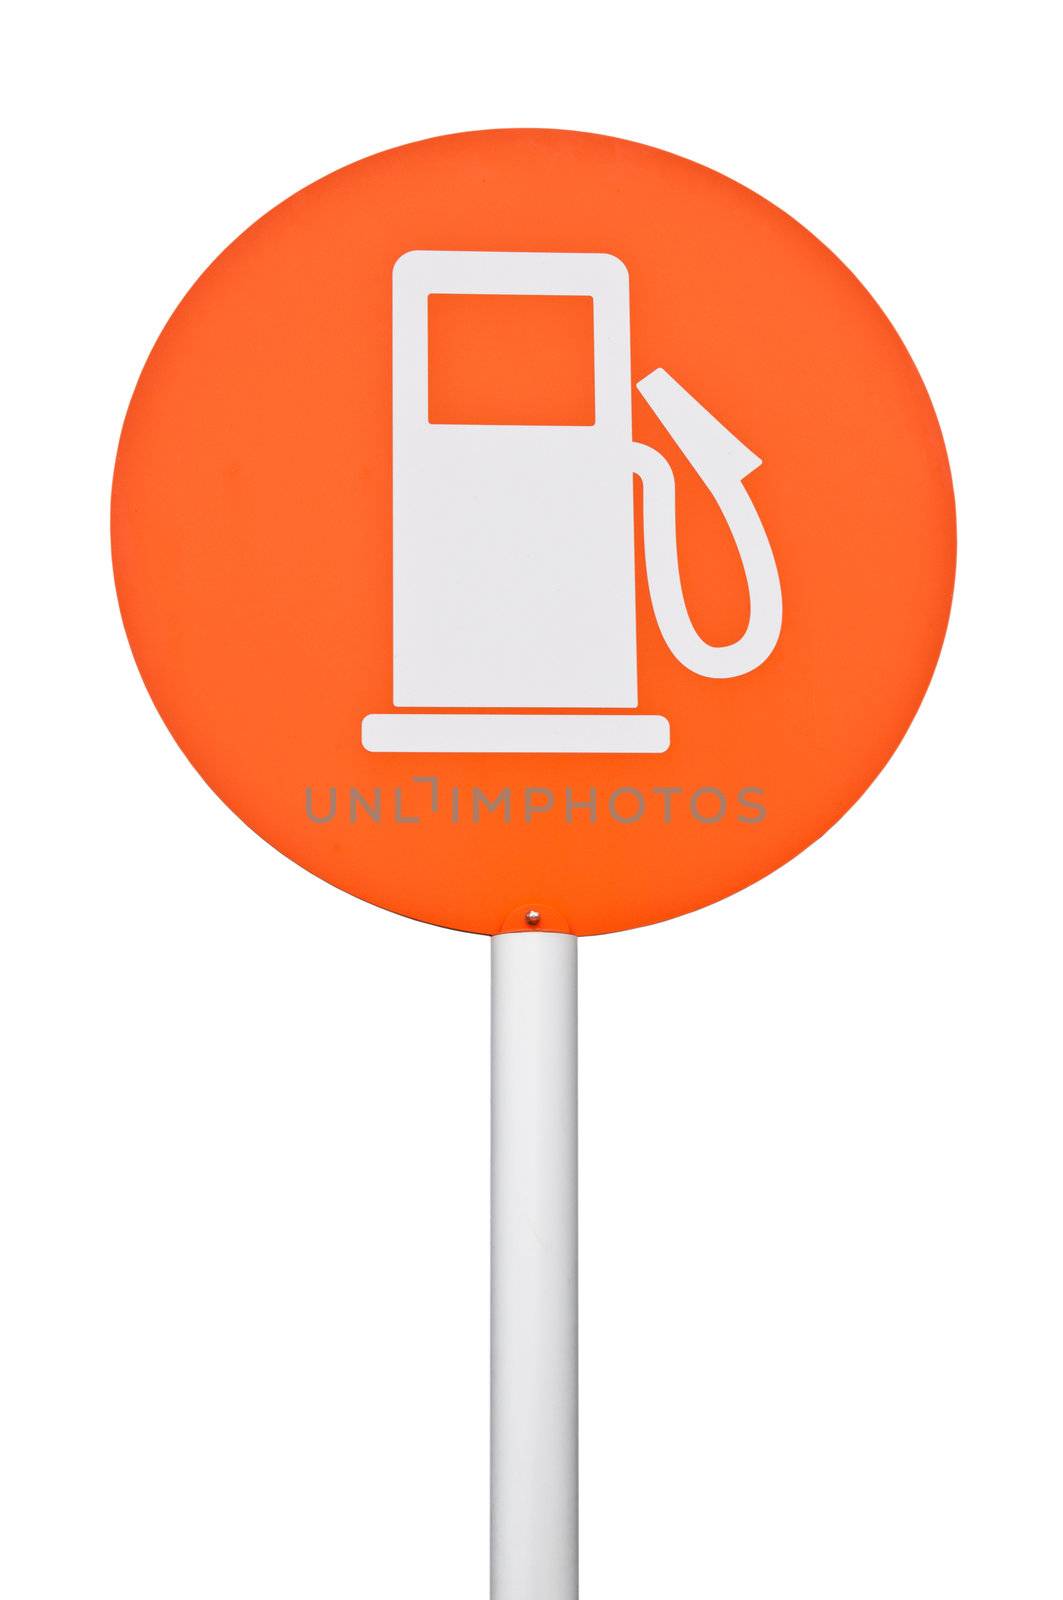 orange gas station sign on post pole (isolated on white background)